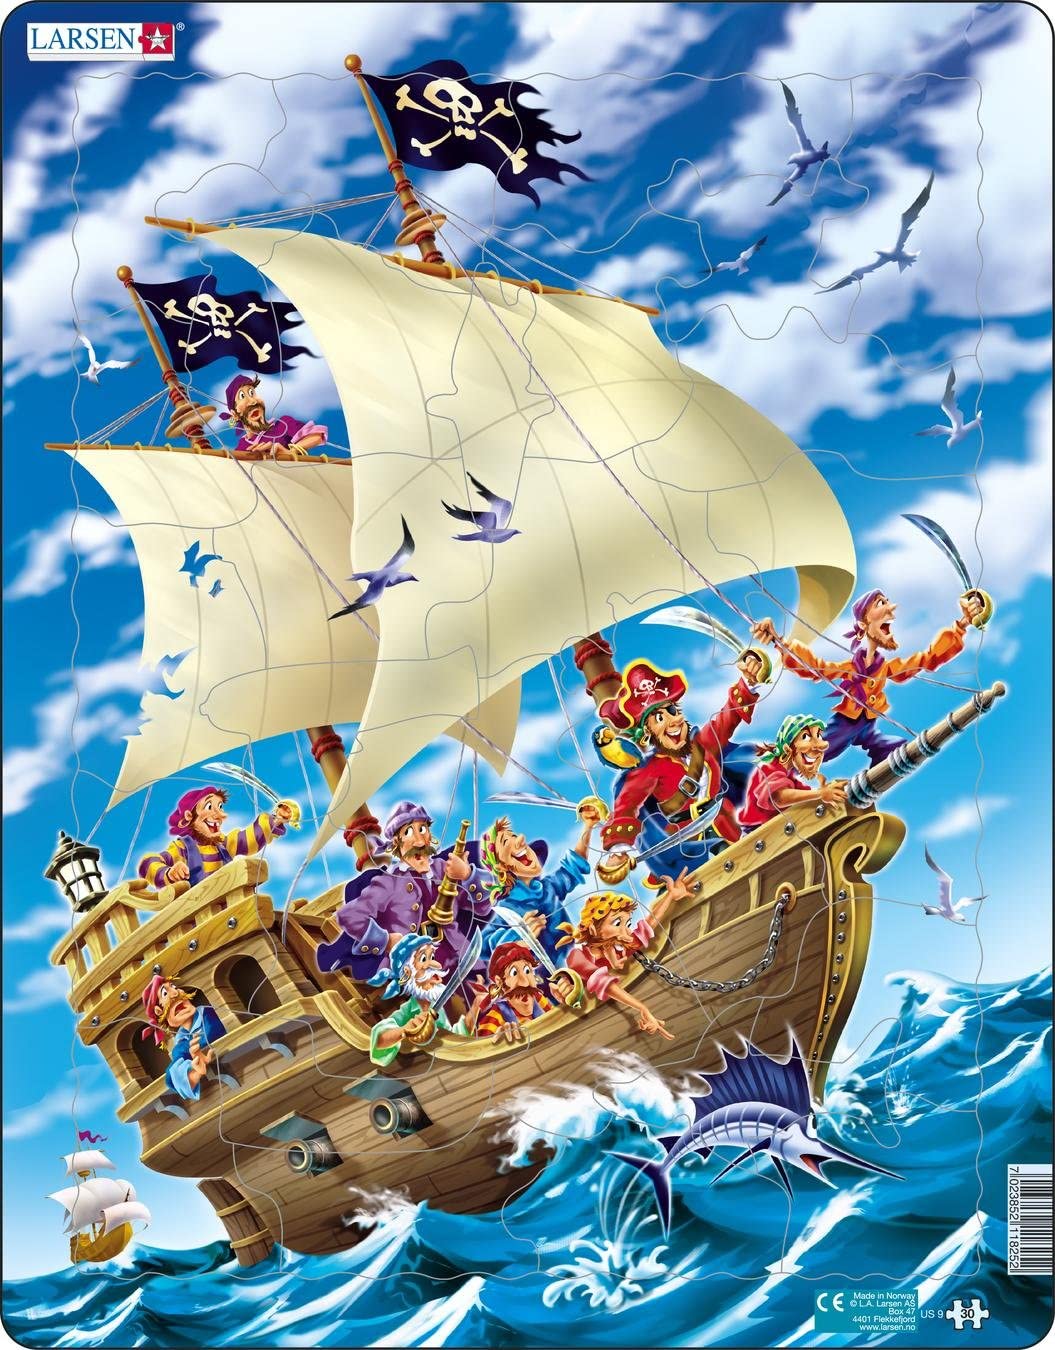 maxi puzzel piraten inval 30st- maxi puzzle raid des pirates 30pc